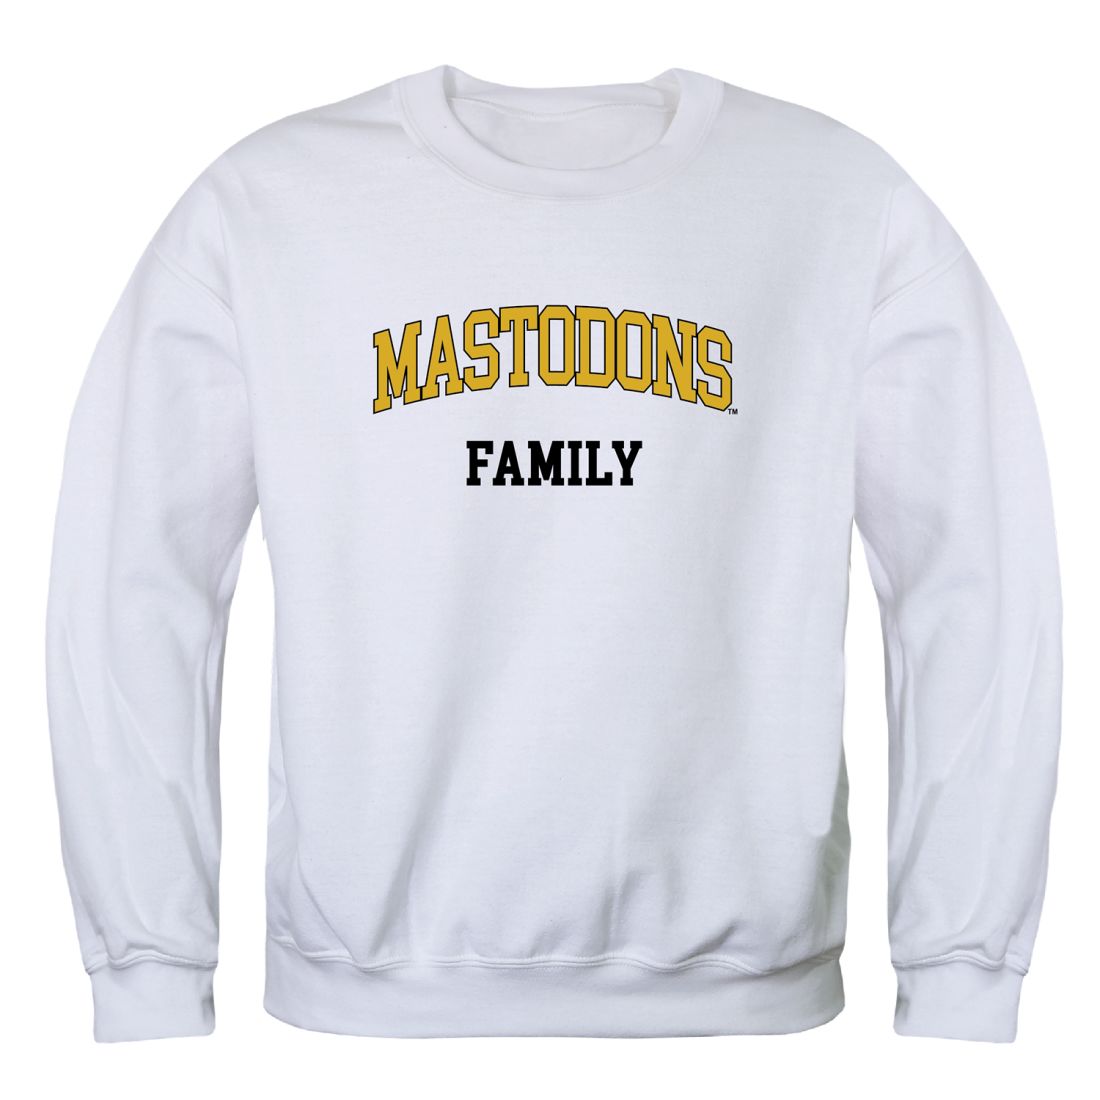 Purdue-University-Fort-Wayne-Mastodons-Family-Fleece-Crewneck-Pullover-Sweatshirt